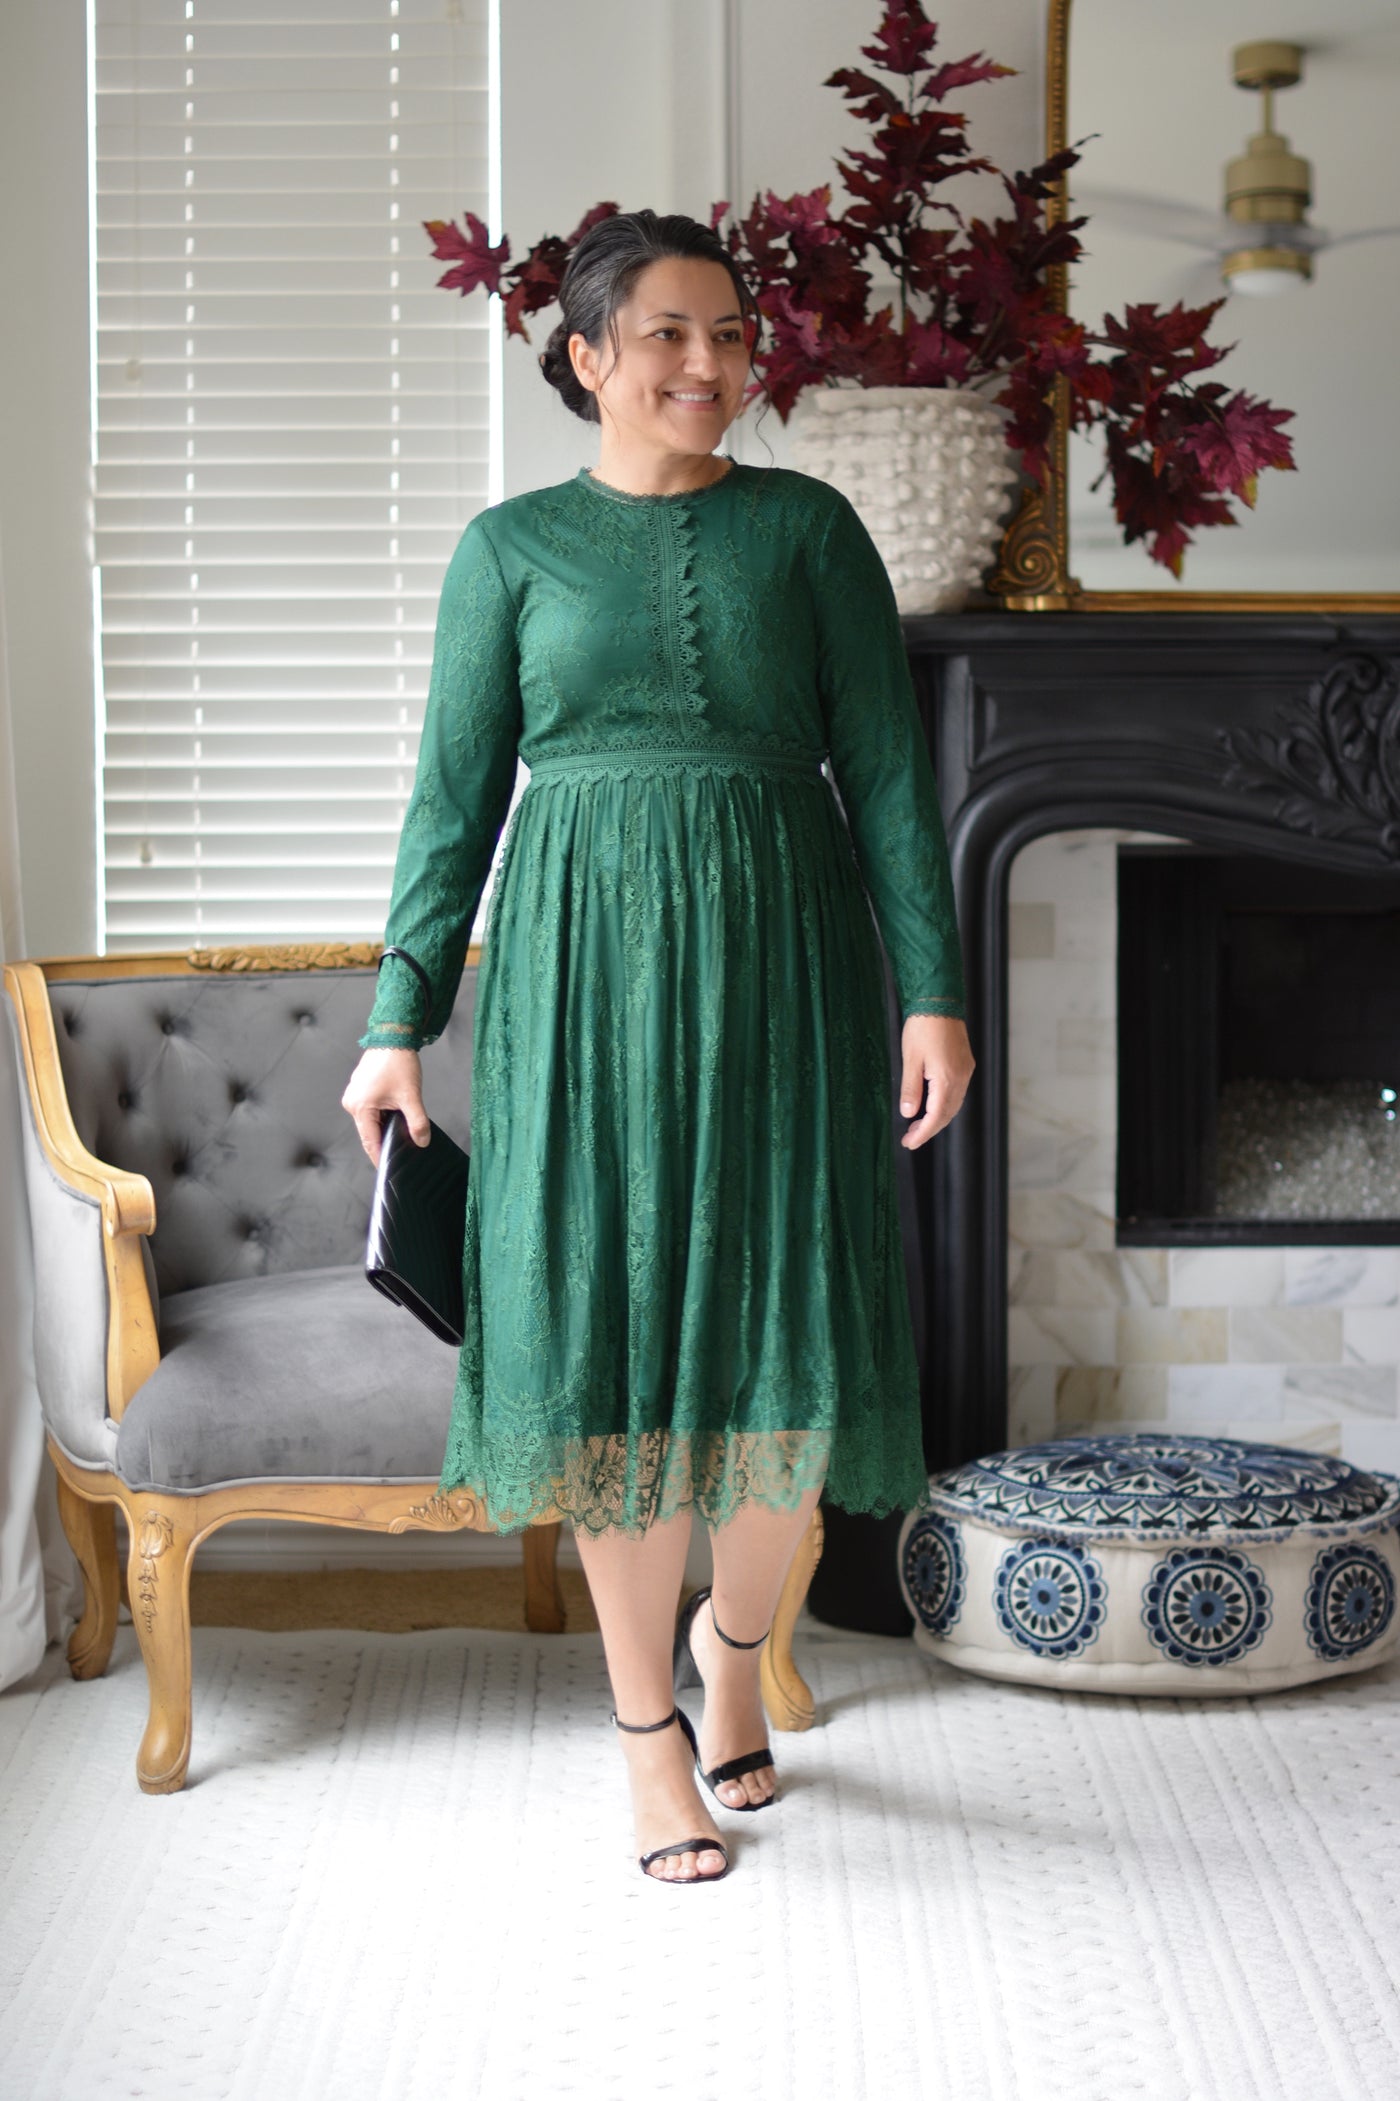 Sydney Emerald Green Lace Dress